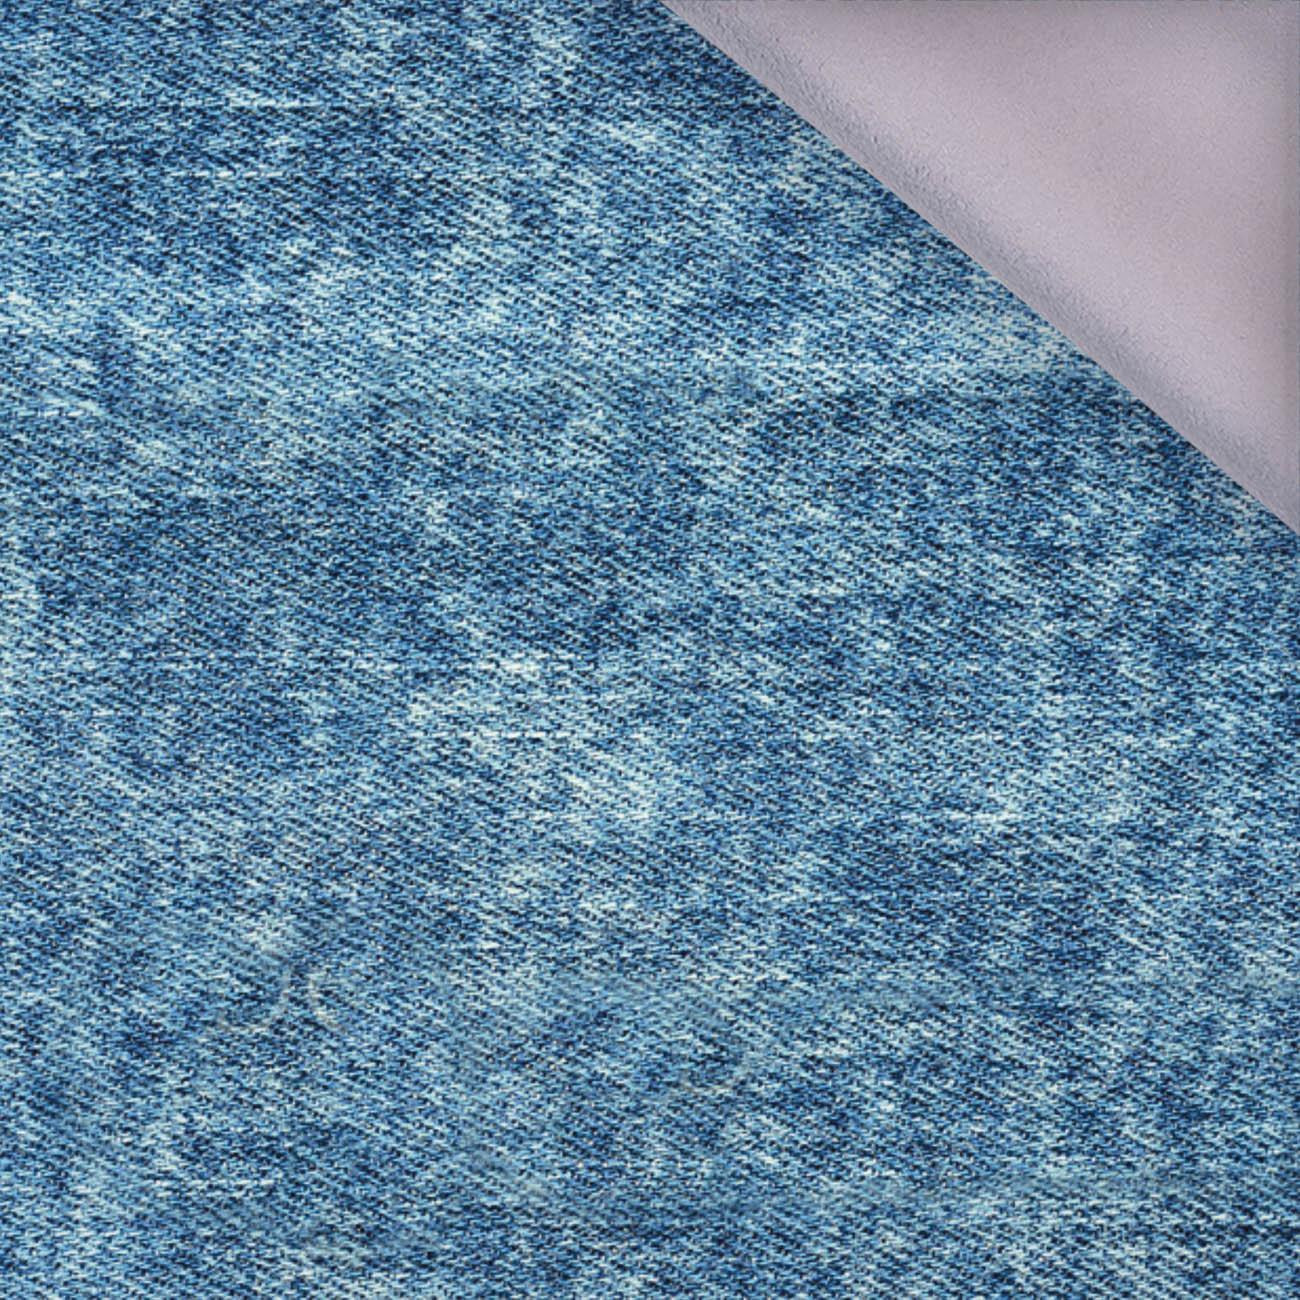 VINTAGE LOOK JEANS (Altantic Blue) - softshell